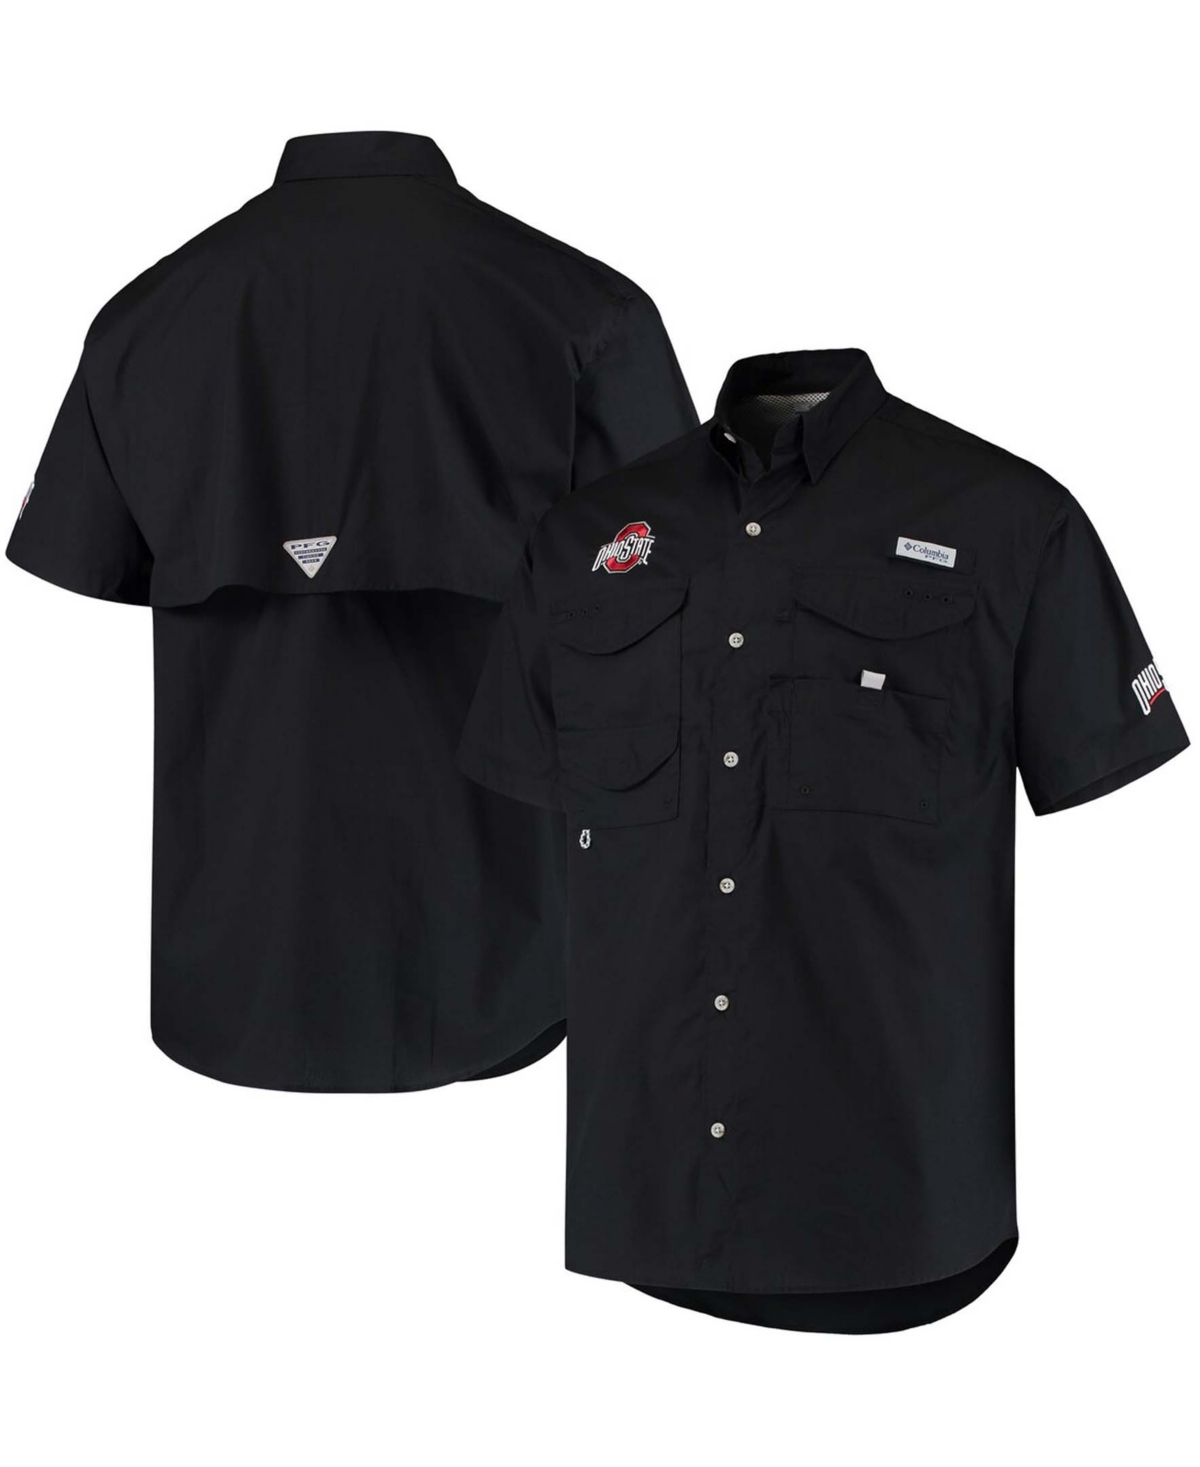 Men's Pfg Ohio State Buckeyes Bonehead Button-Up Shirt - Black